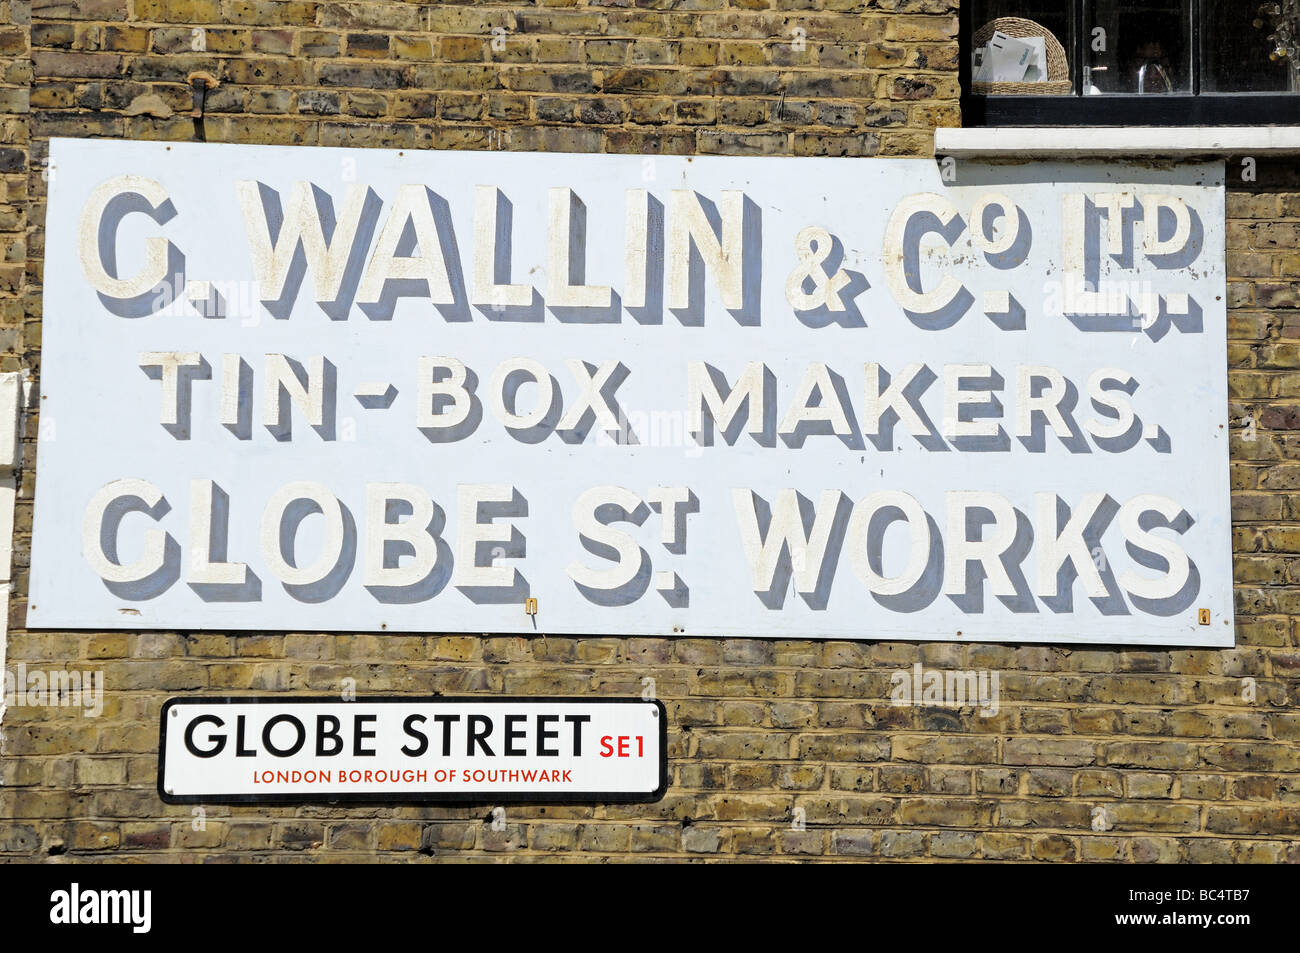 Old sign on wall for tin box makers C Wallin Globe Street Southwark London SE1 England UK Stock Photo